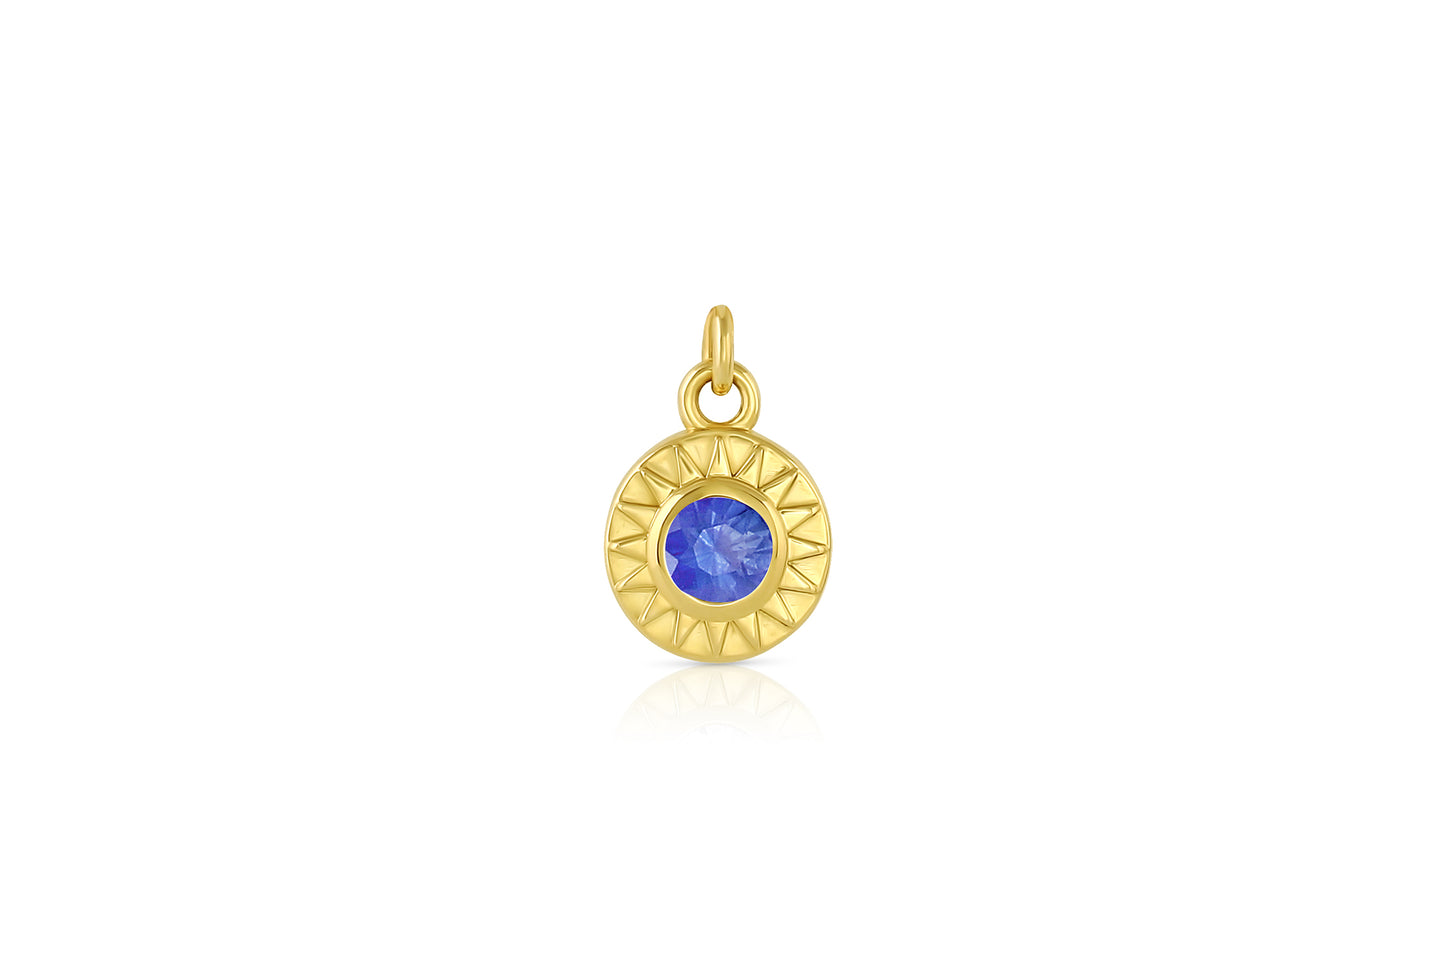 18k yellow gold sunburst circle pendant with blue sapphire center stone.